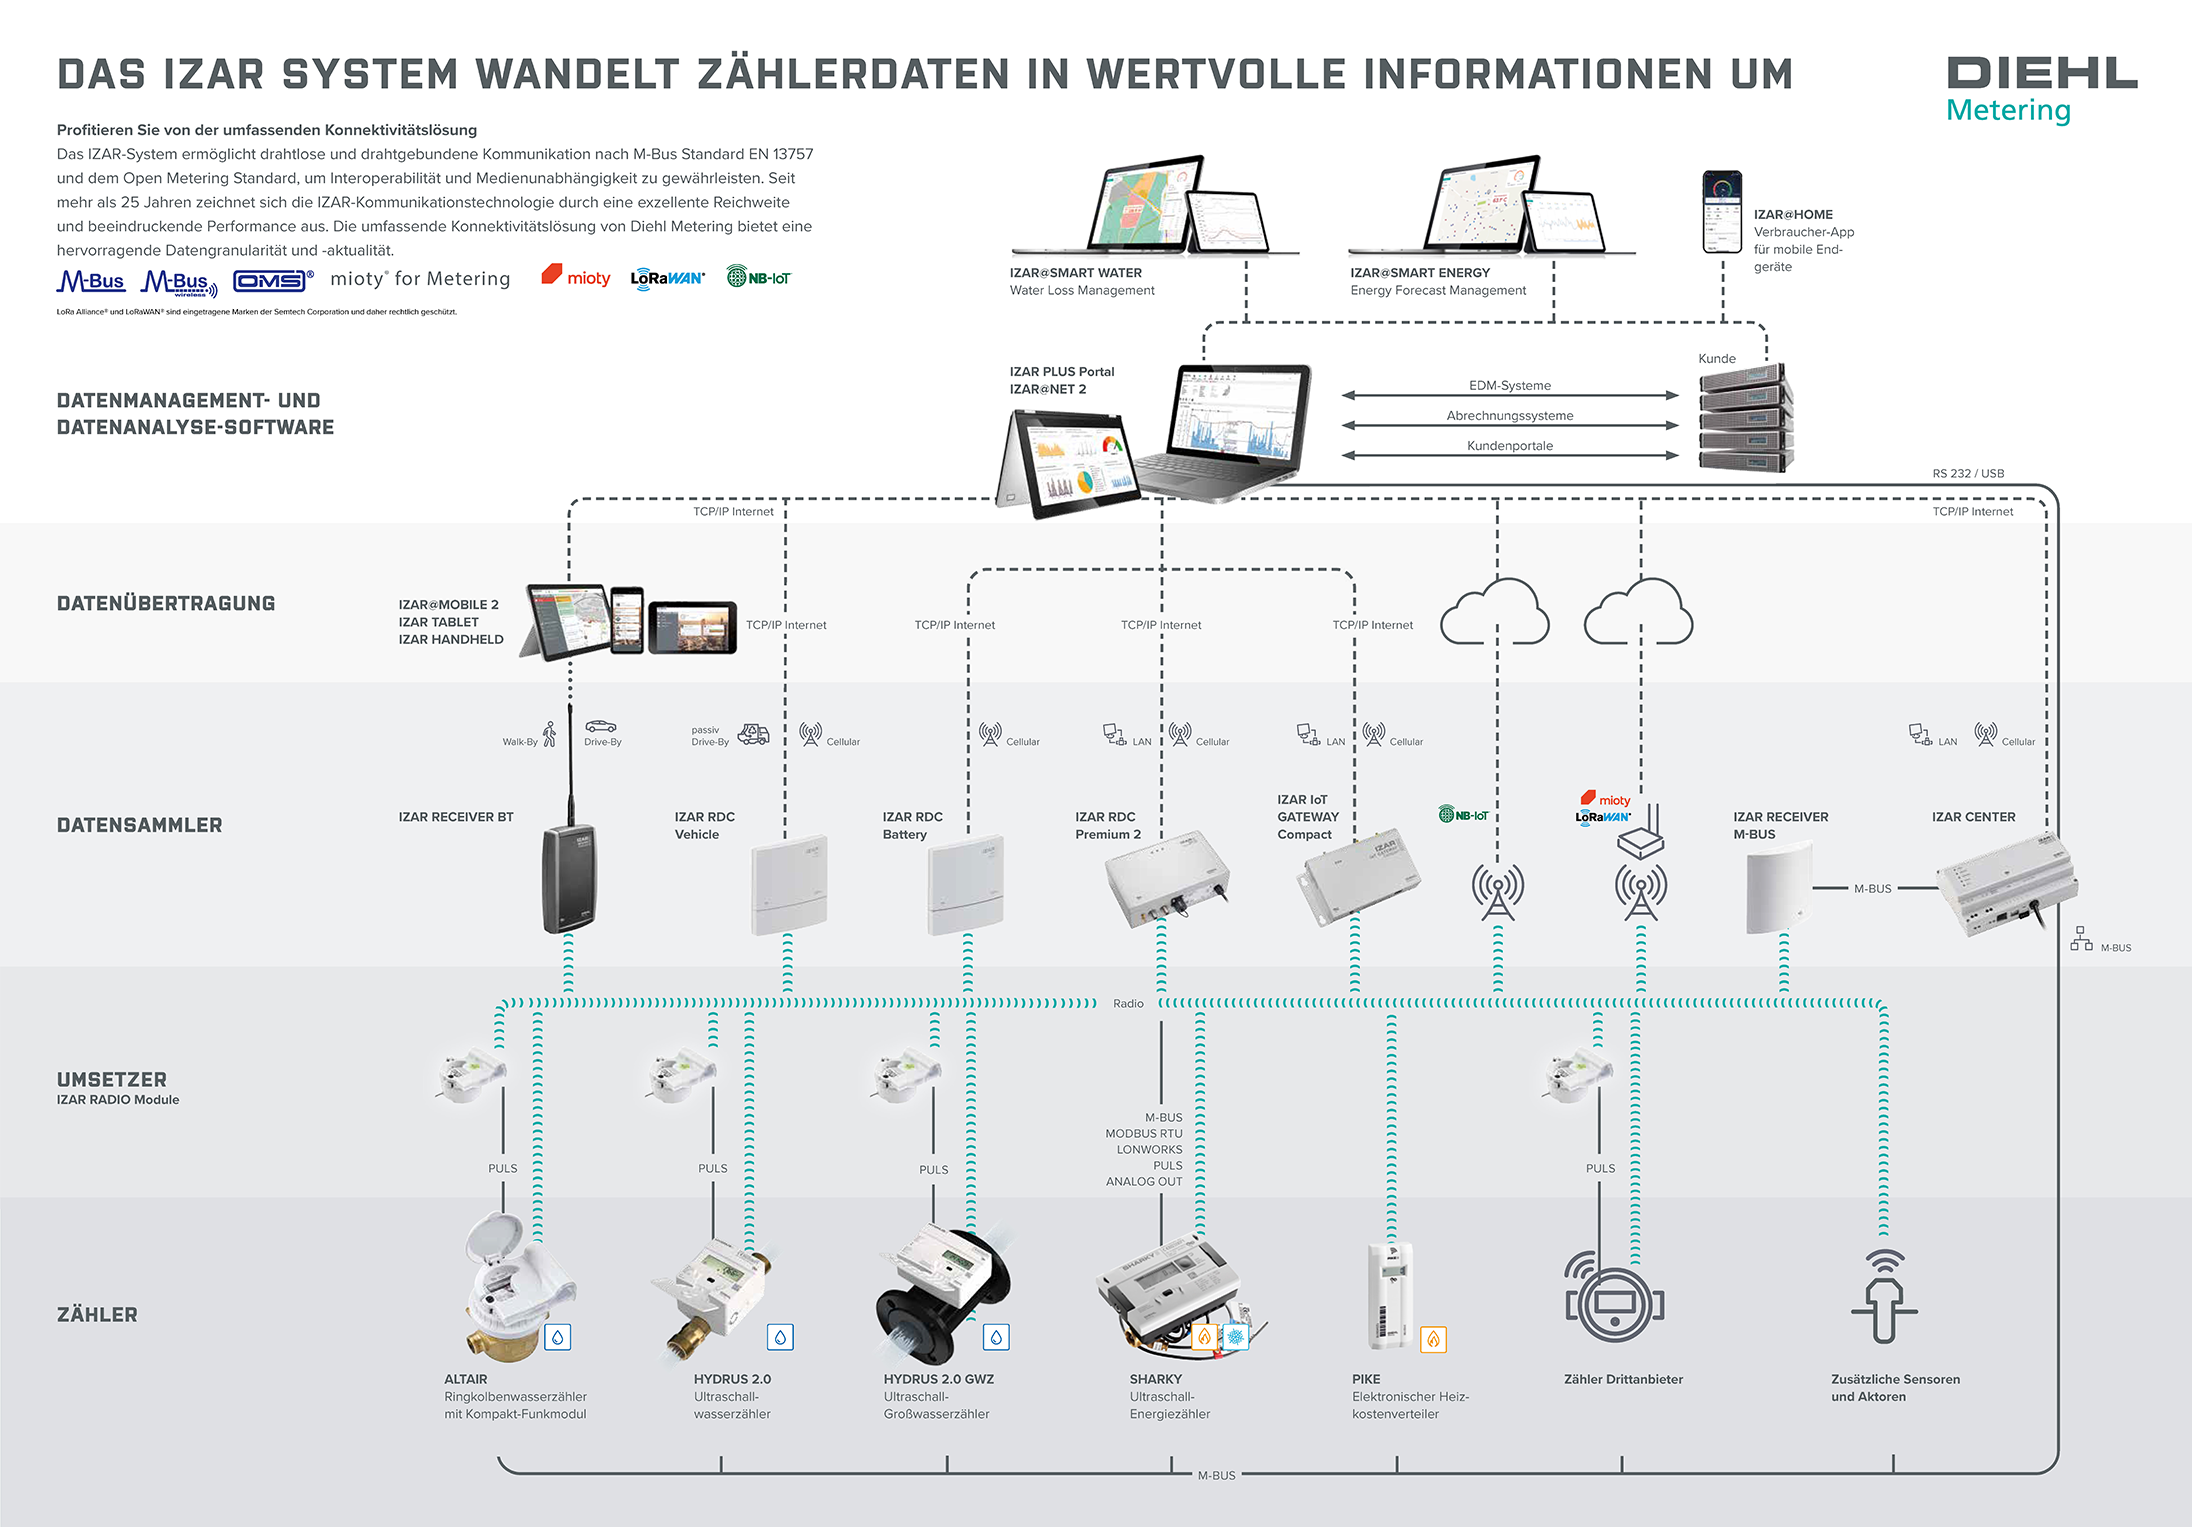 Diehl Metering IZAR System English poster ​ 41 / 5 000 Résultats de traduction Résultat de traduction Diehl Metering IZAR System Deutsches Poster